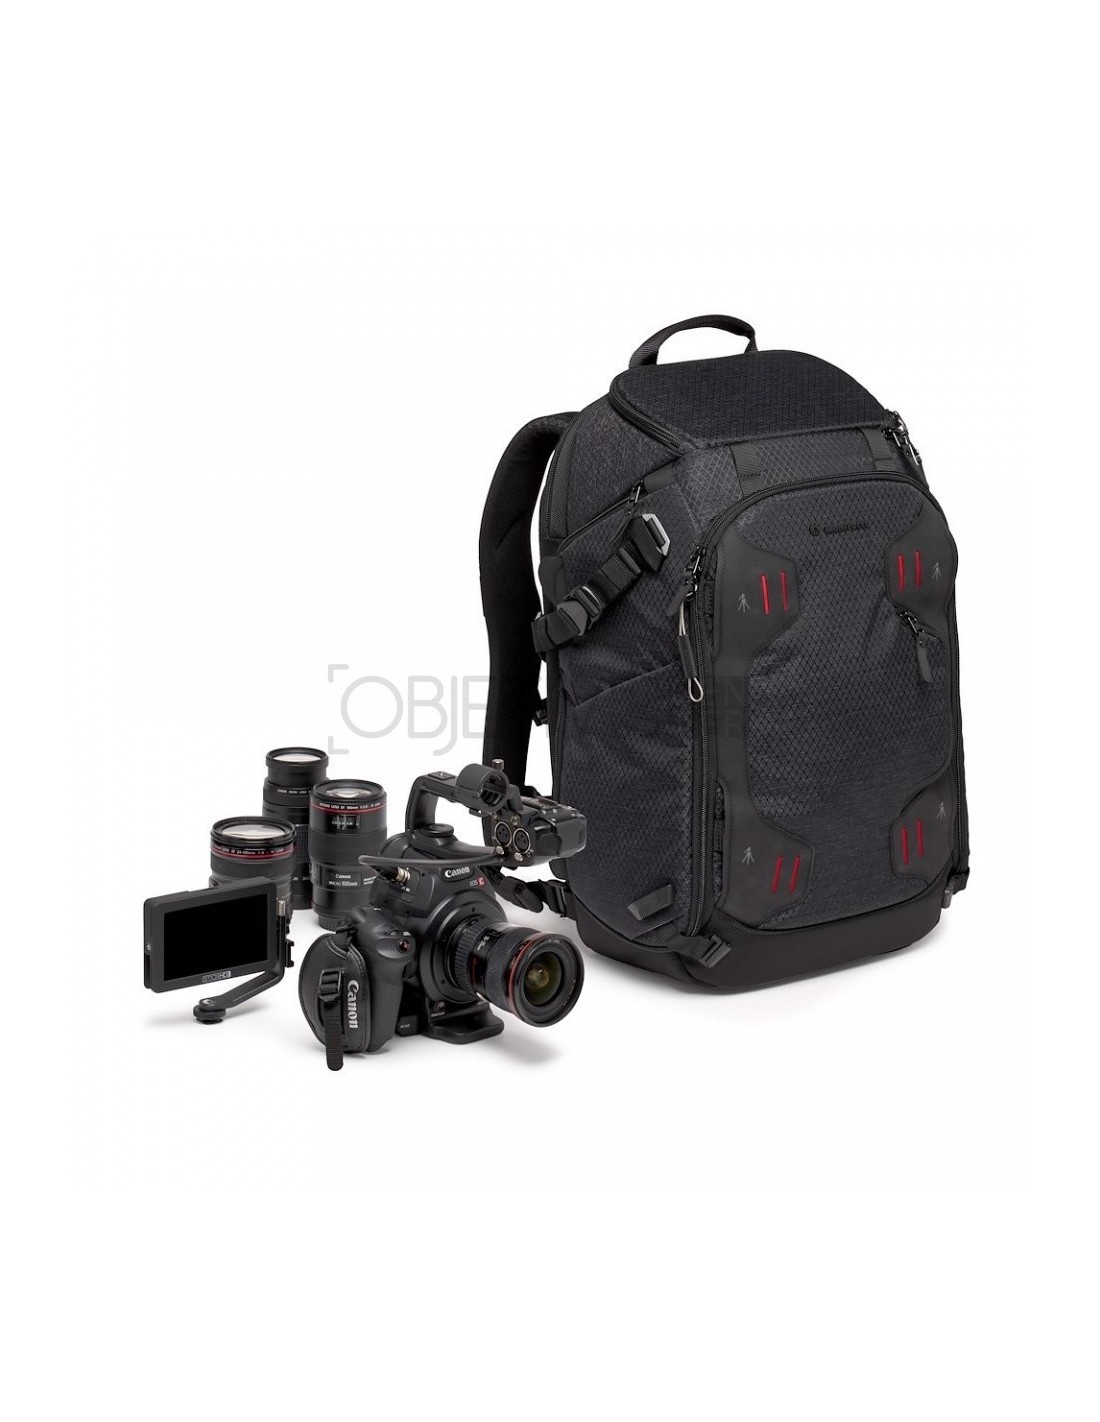 Lowepro Mochila para cámara Freeline 350 AW, color negro. Mochila versátil  diseñada para viajes, fotógrafos y videógrafos. para DSLR, sin espejo